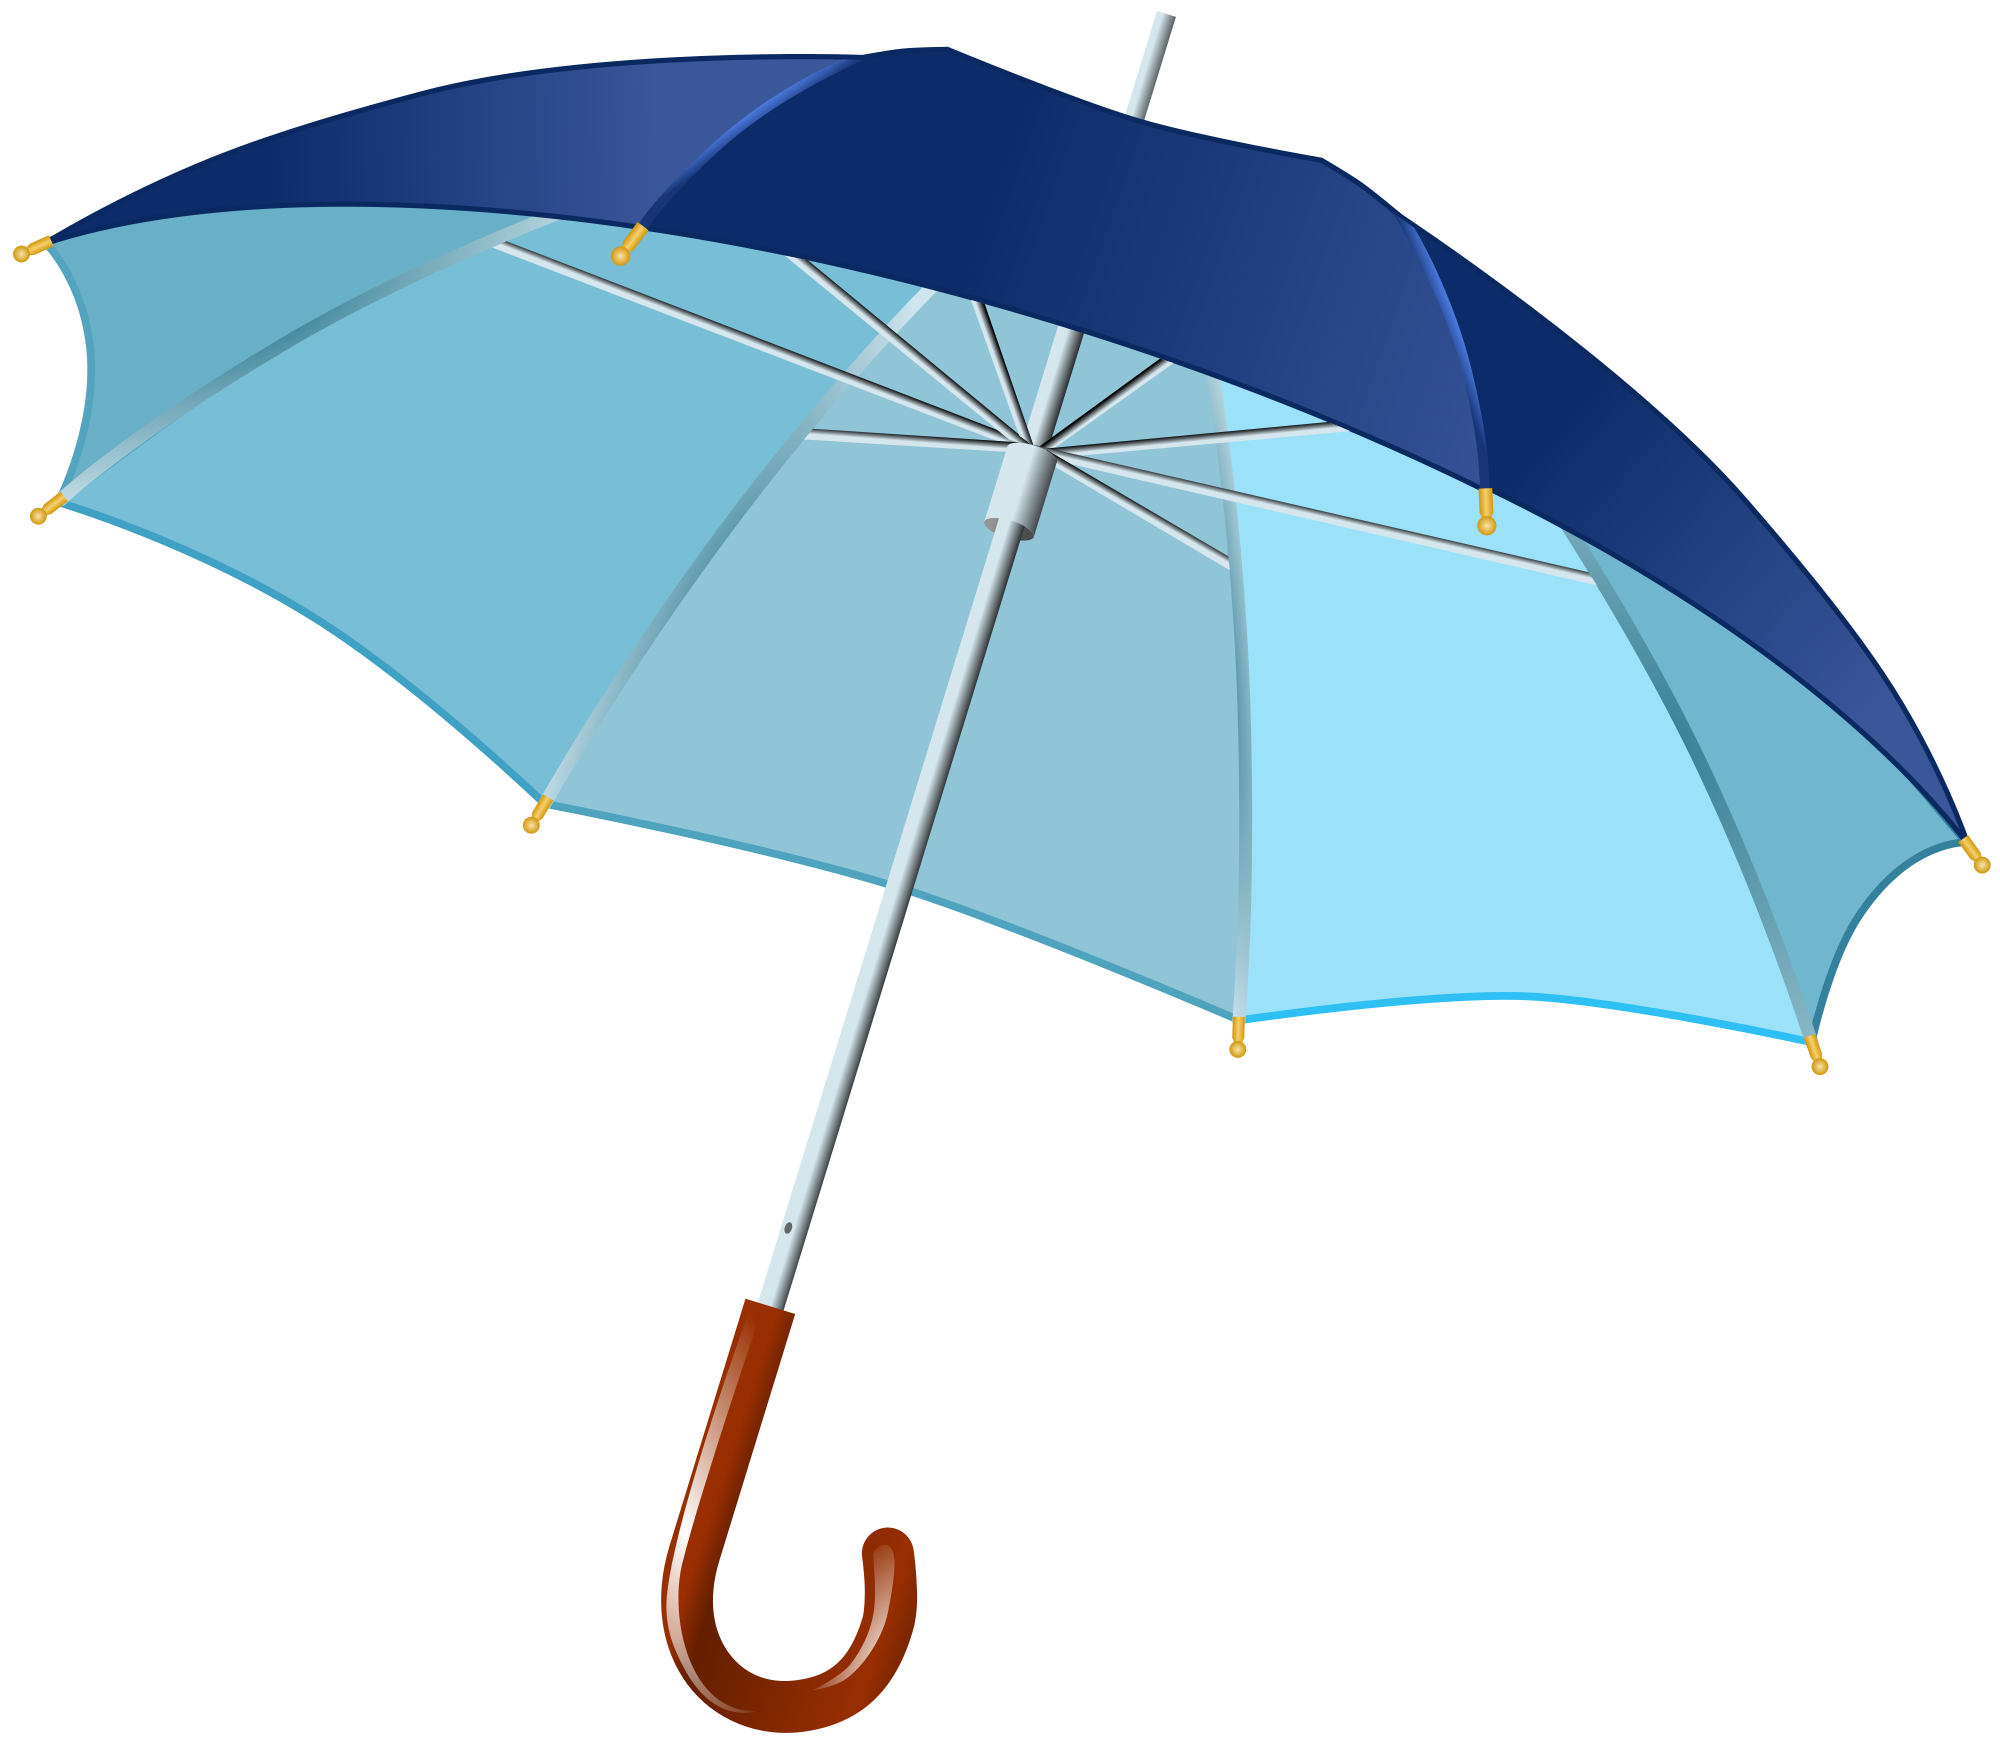 File:Umbrella opened.svg - Wikimedia Commons